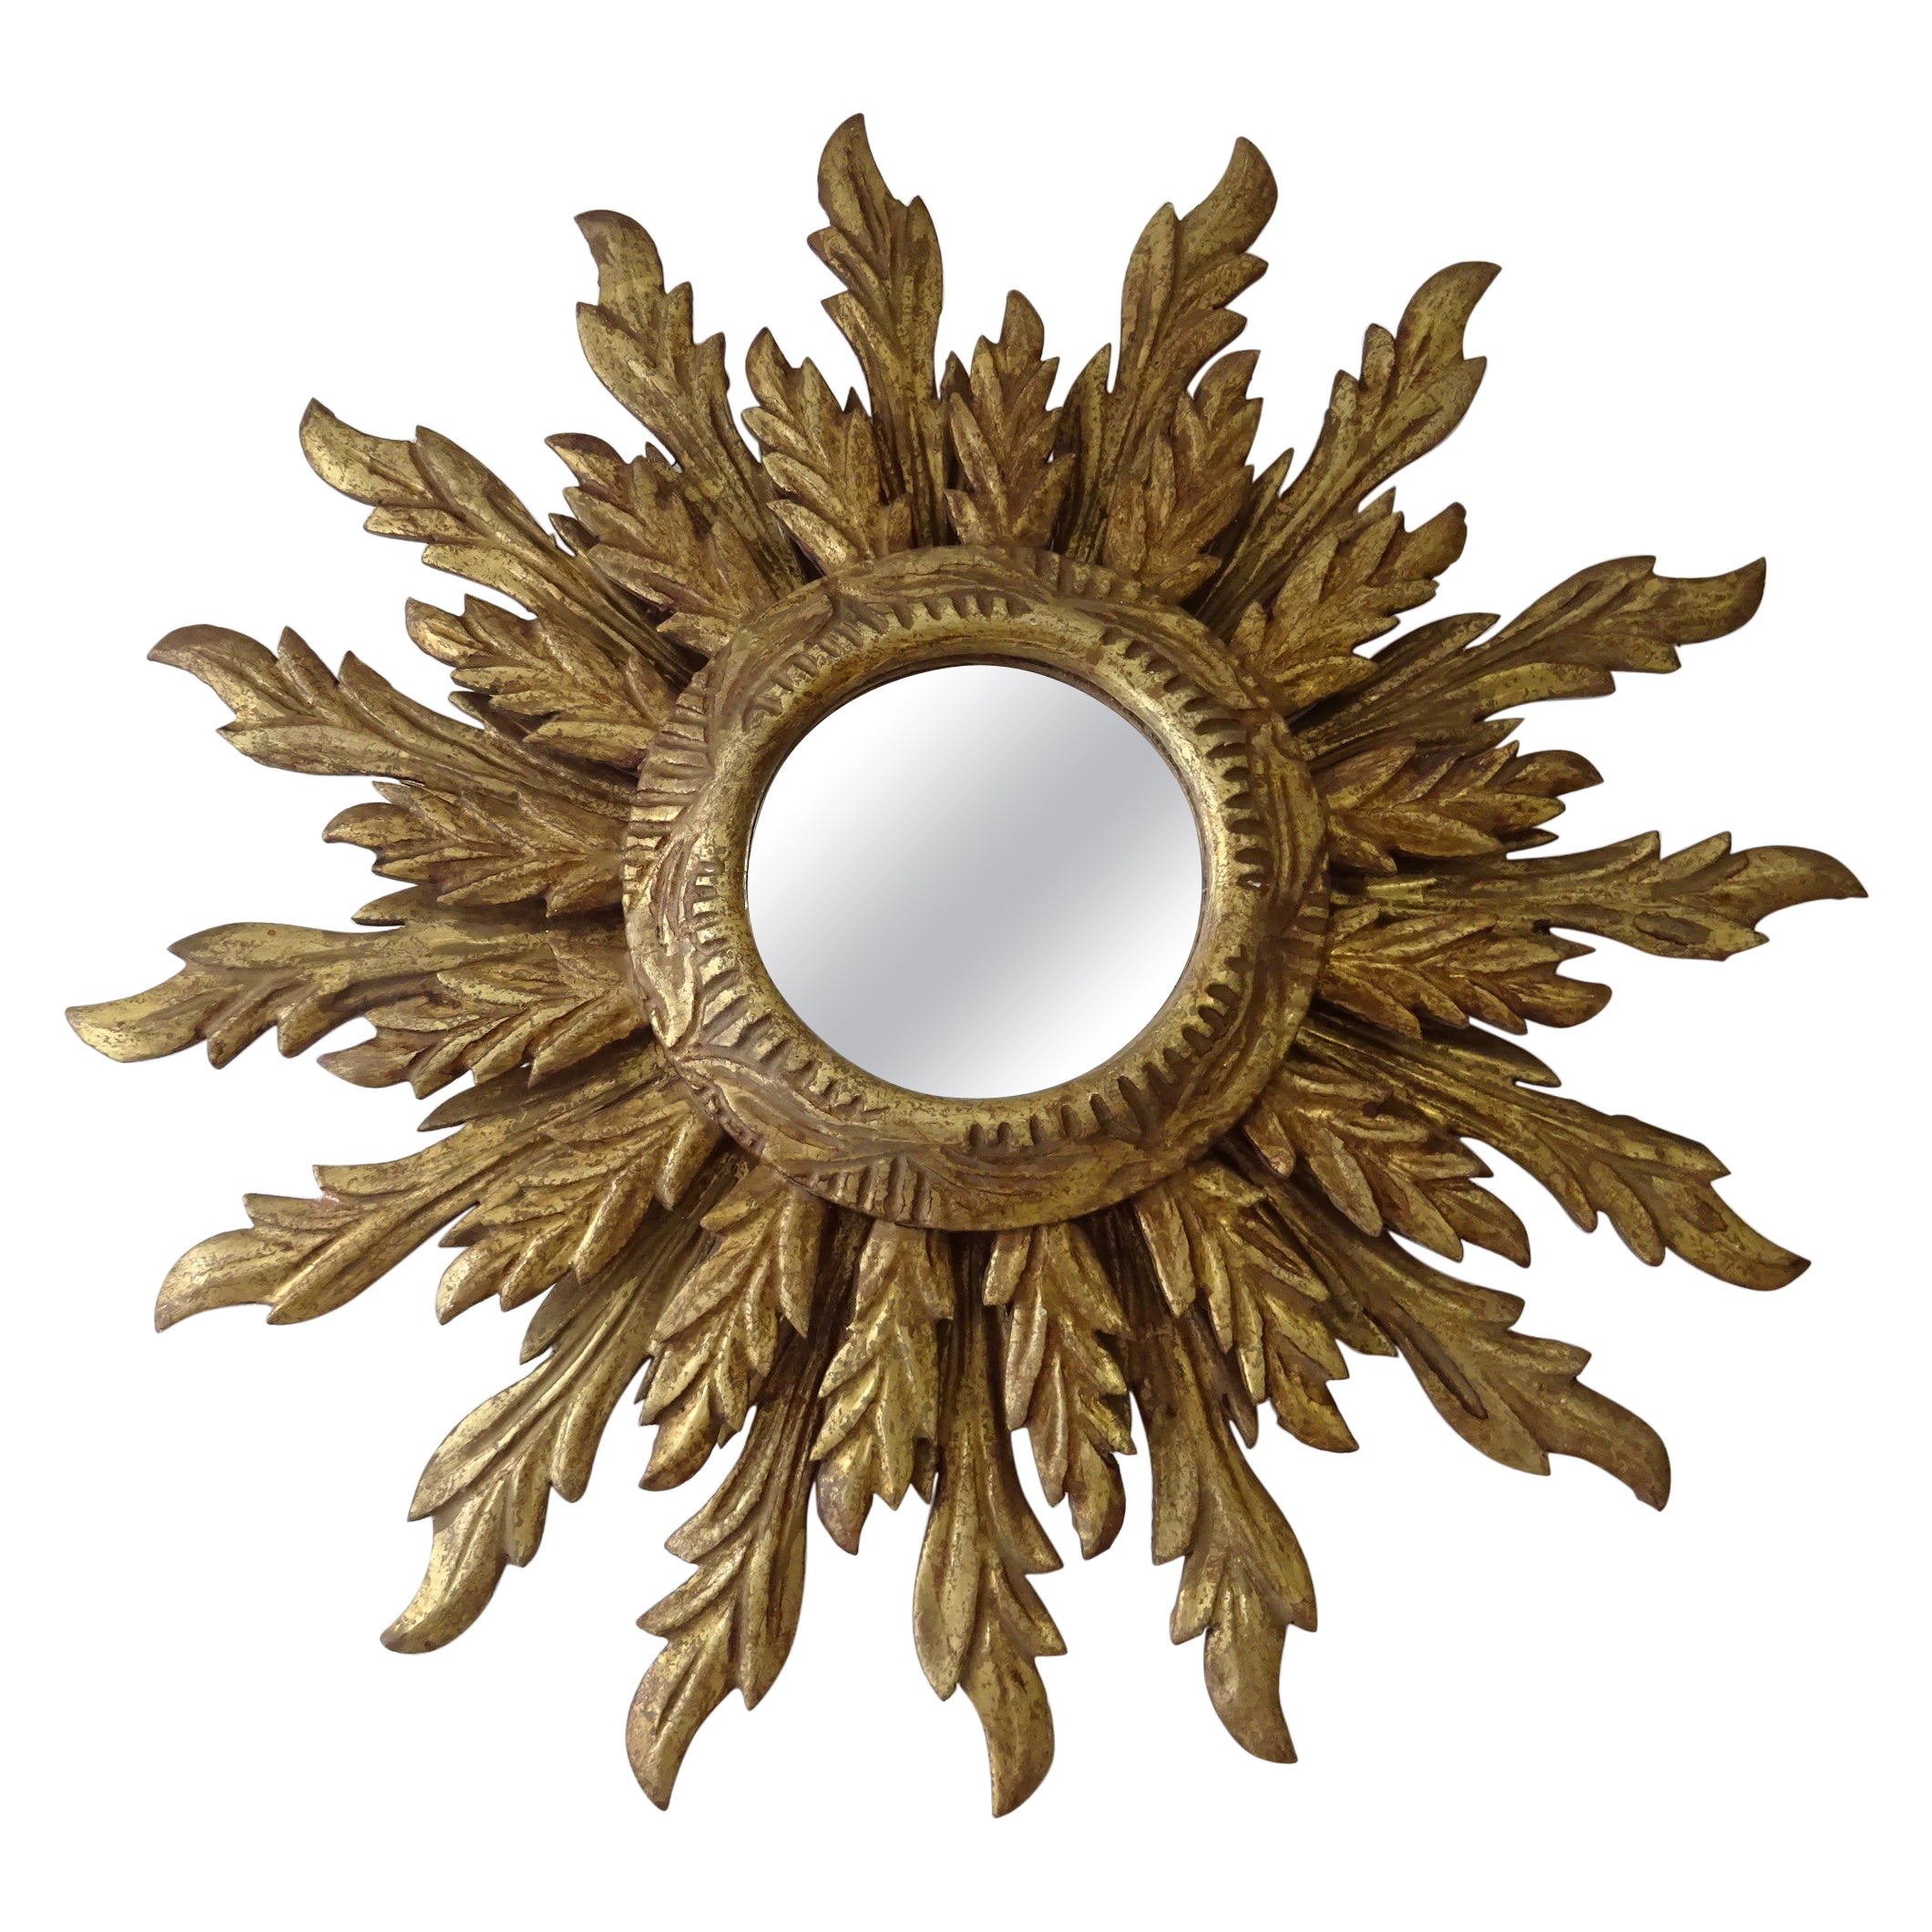 1920s French Big Double Gold Gilt Sunburst Starburst Mirror